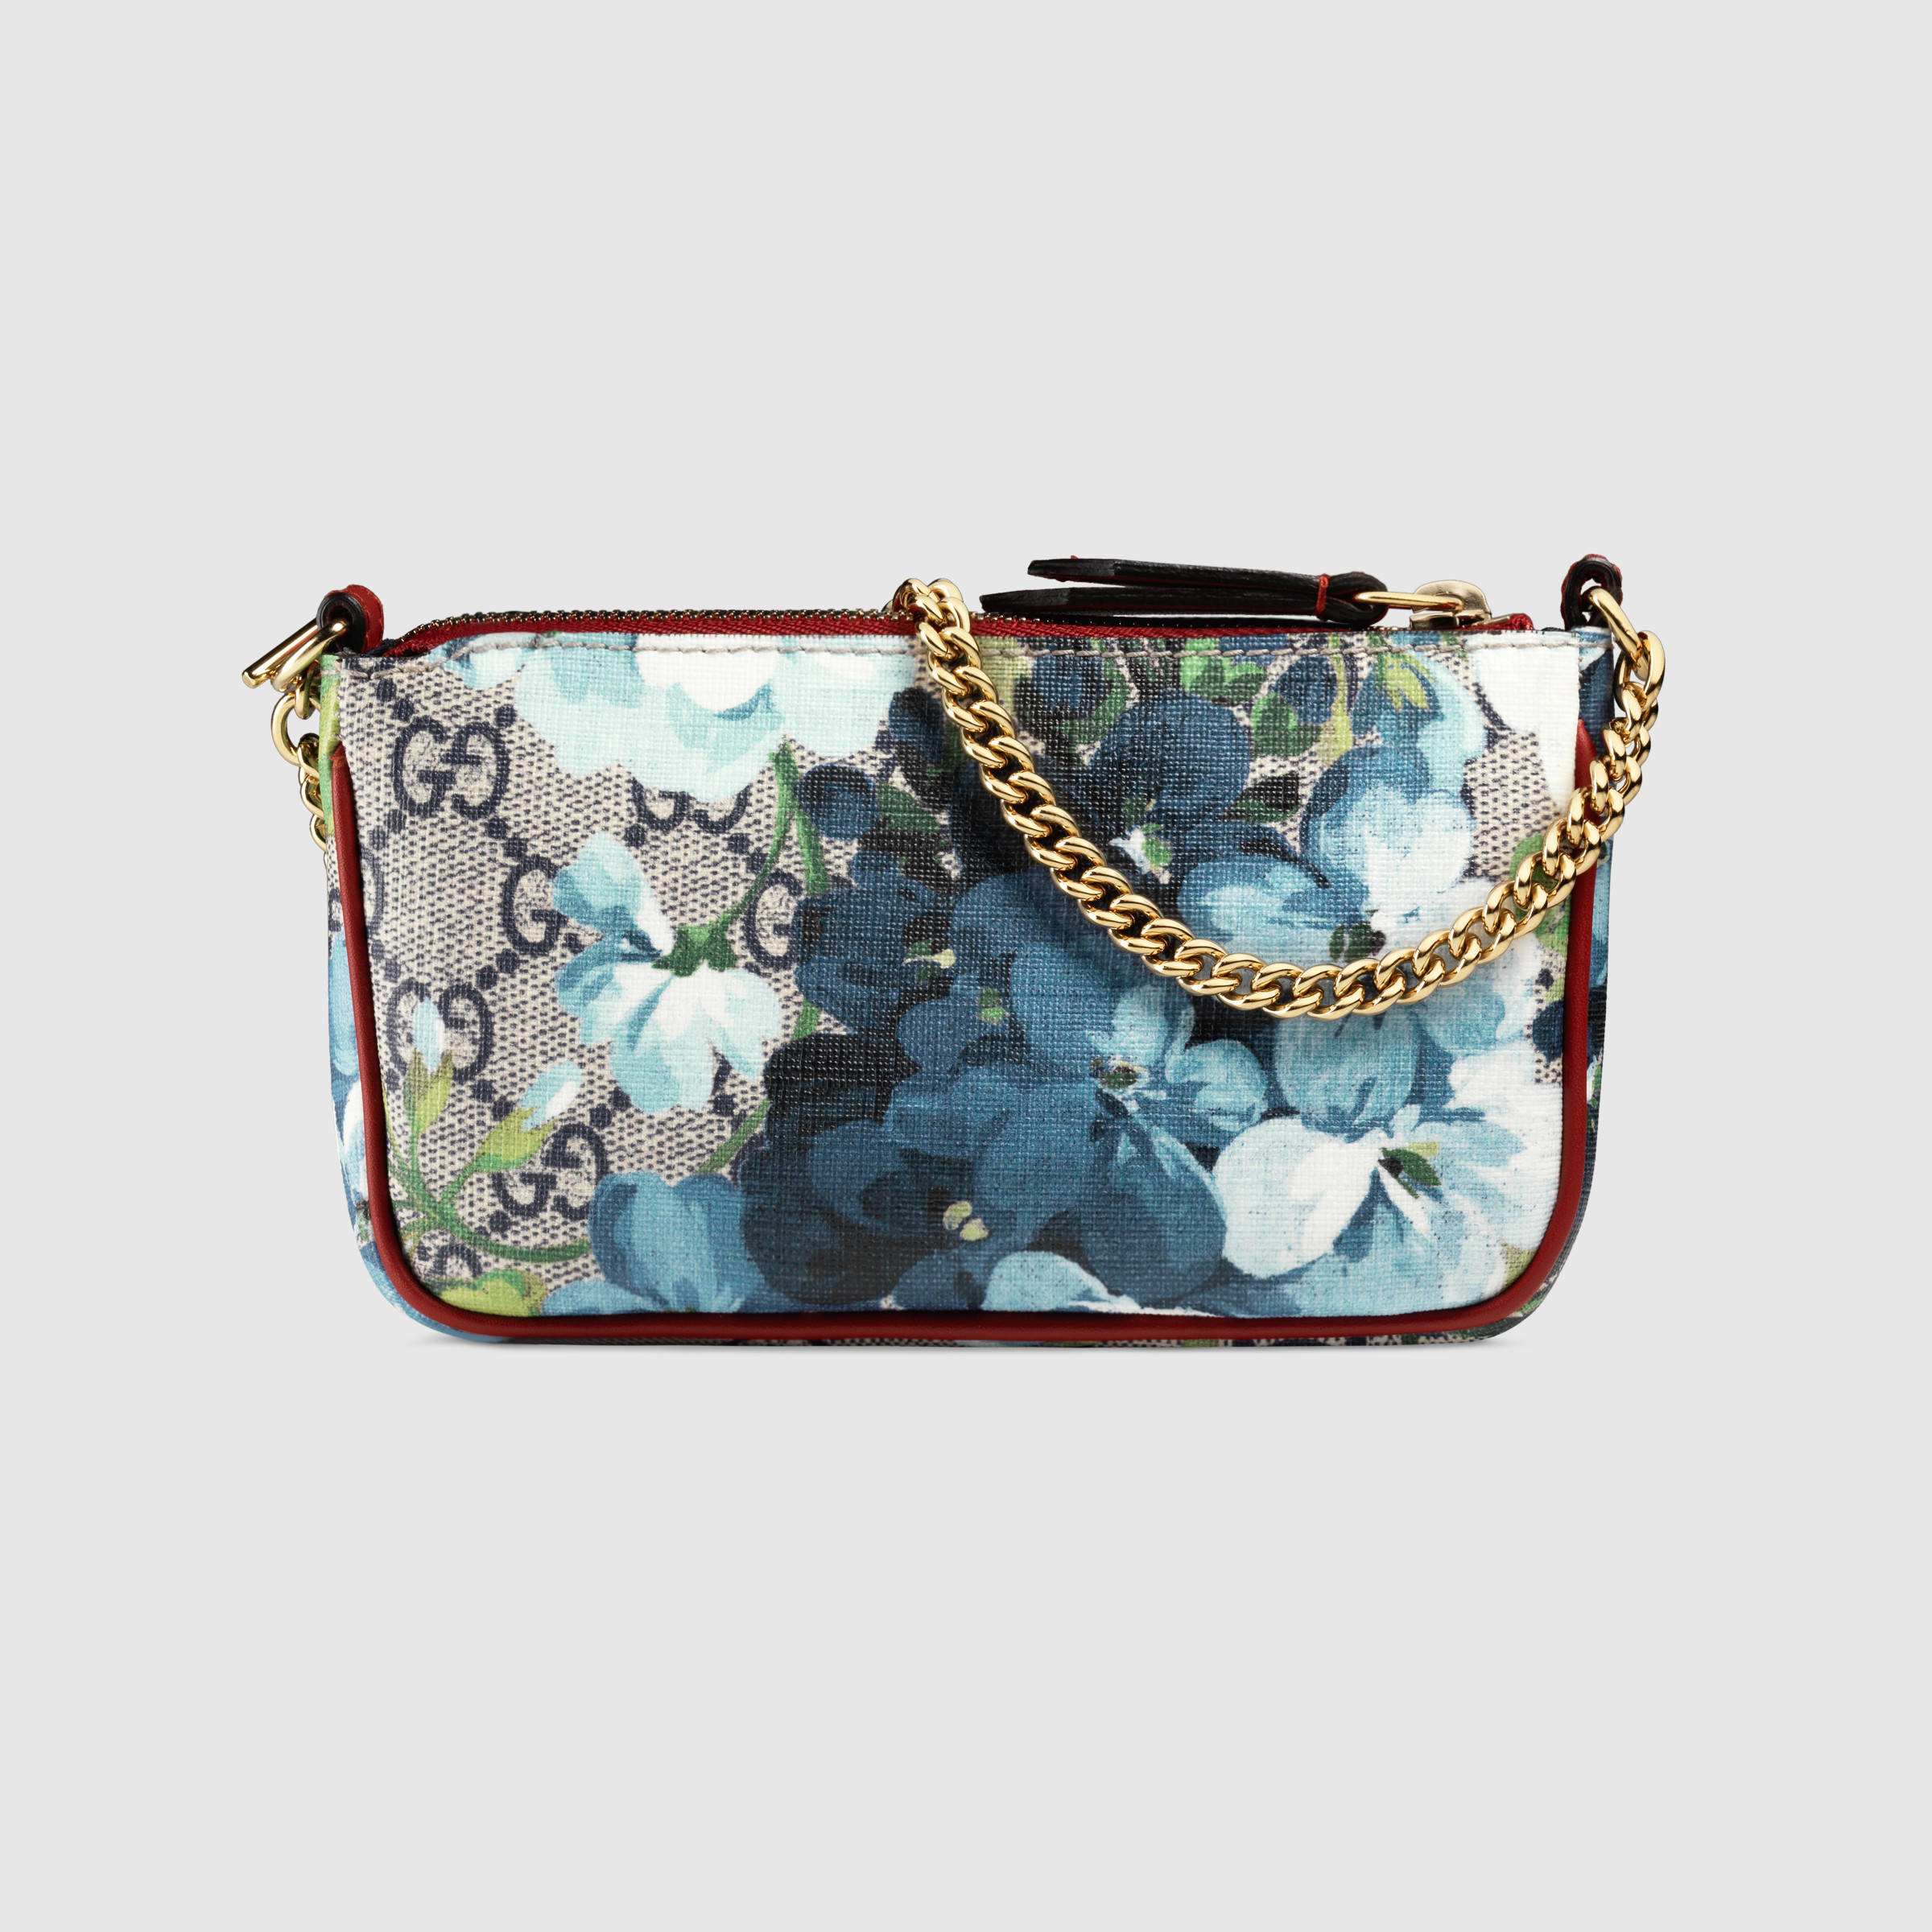 Gucci Canvas Gg Blooms Mini Chain Bag in Blue - Lyst